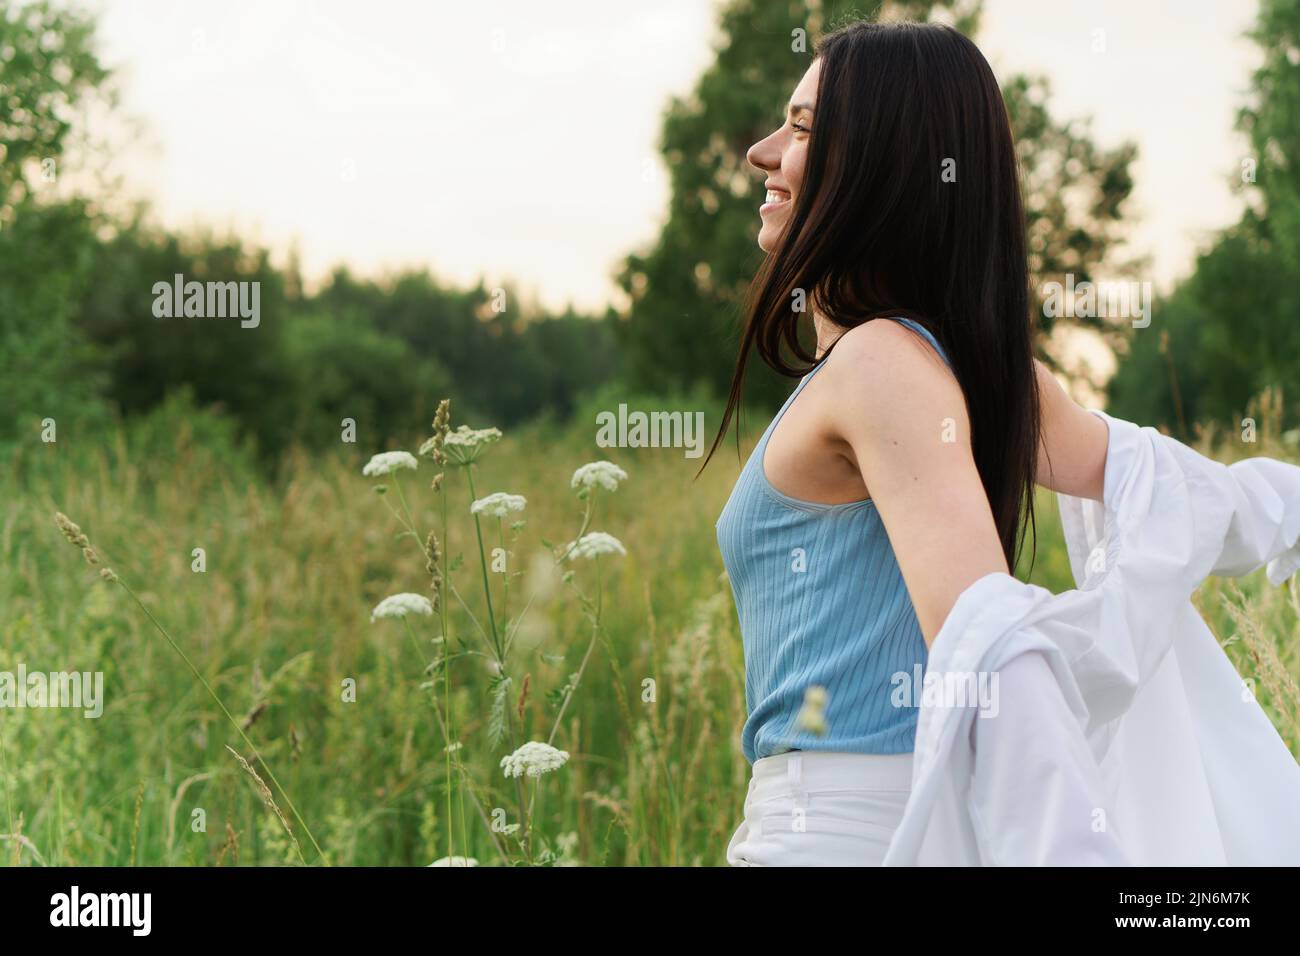 Young Smiling Woman in White Shirt Enjoying Nature In Green Meadow Stock Photo